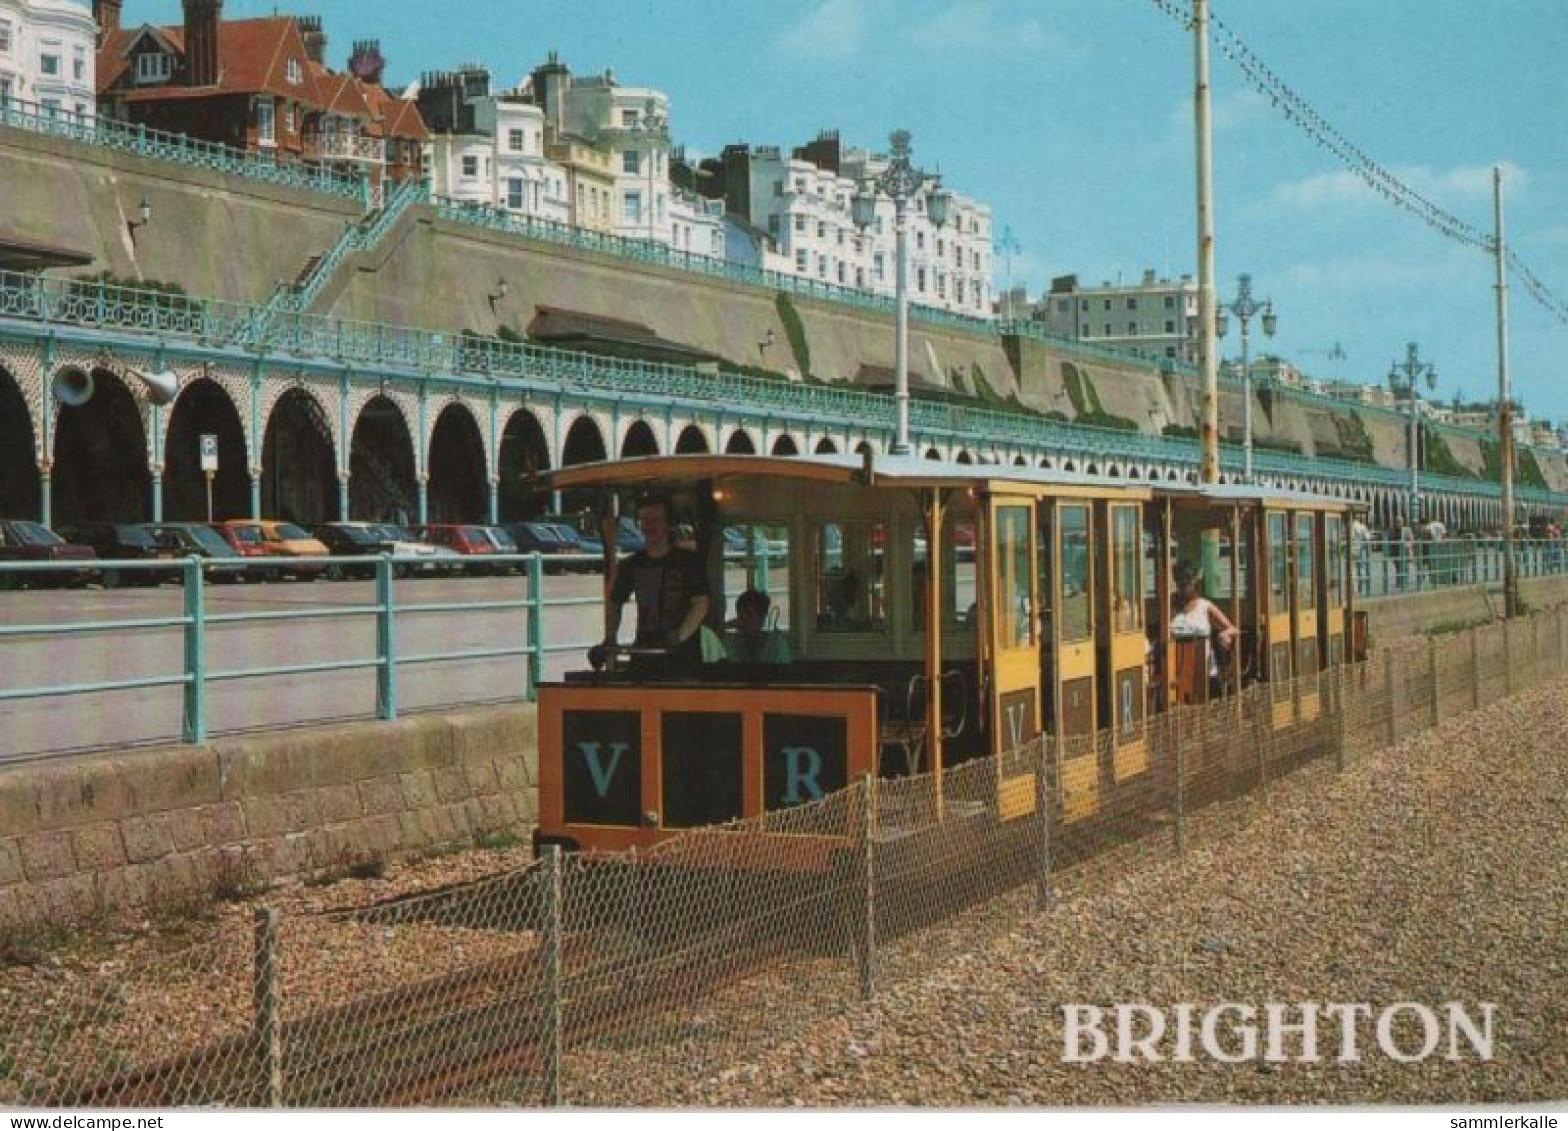 102653 - Grossbritannien - Brighton - Volk Electric Railway - 2001 - Brighton